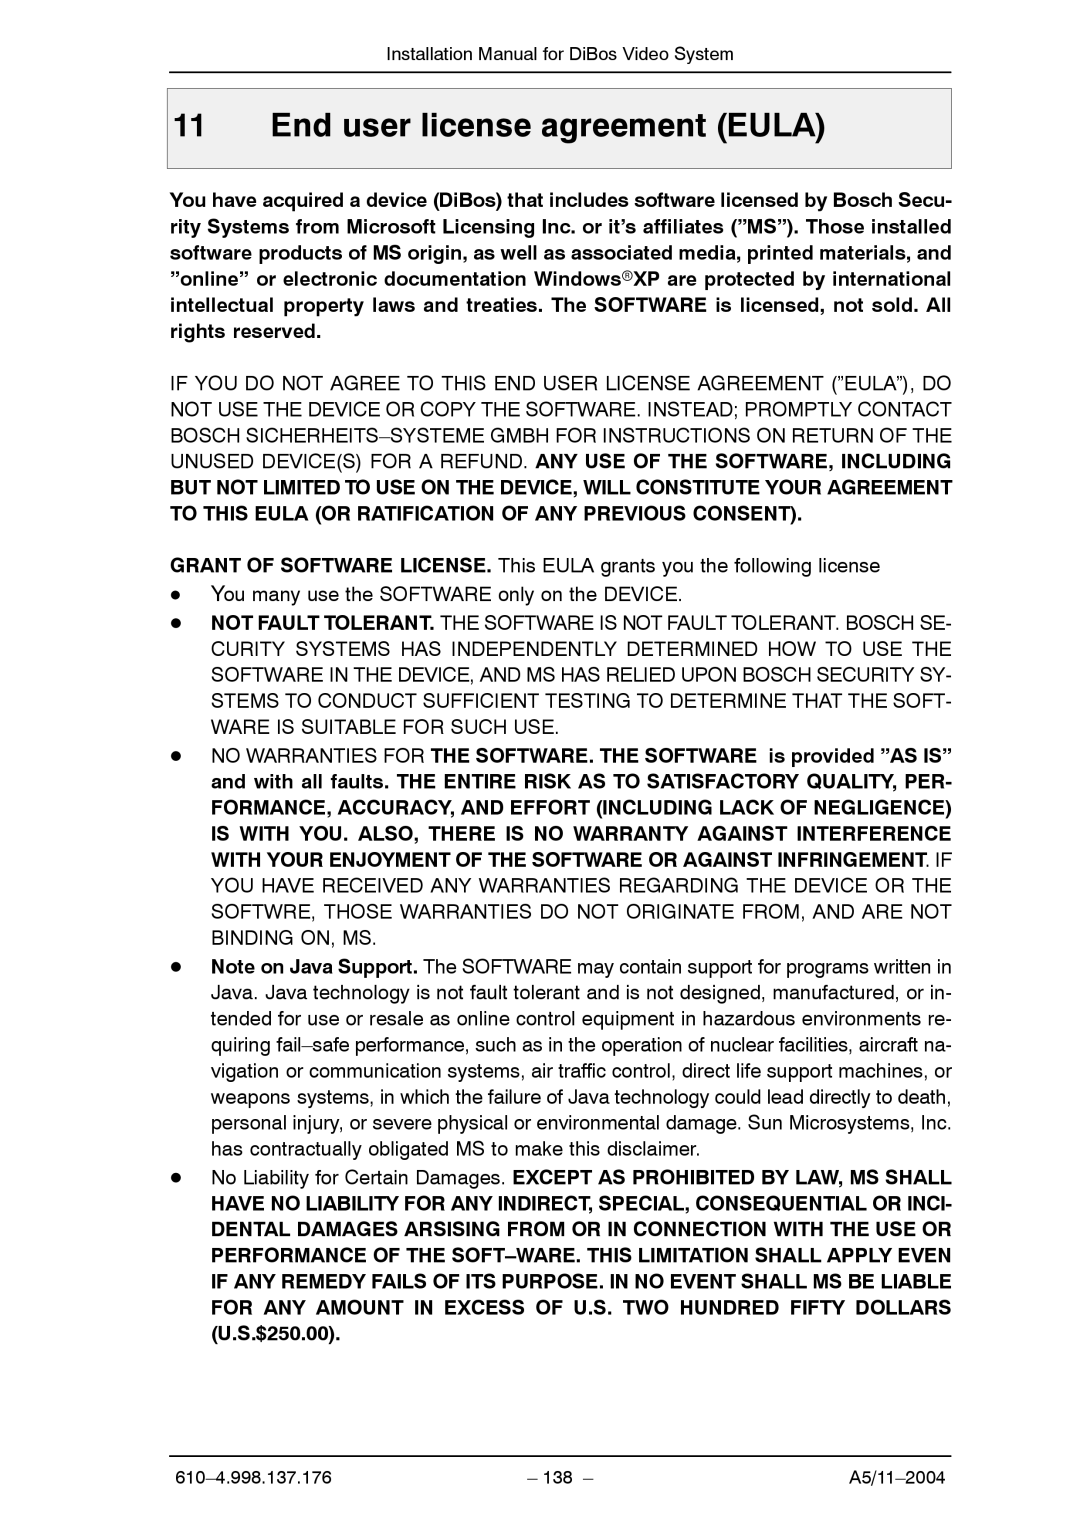 Bosch Appliances A5 installation manual End user license agreement Eula 